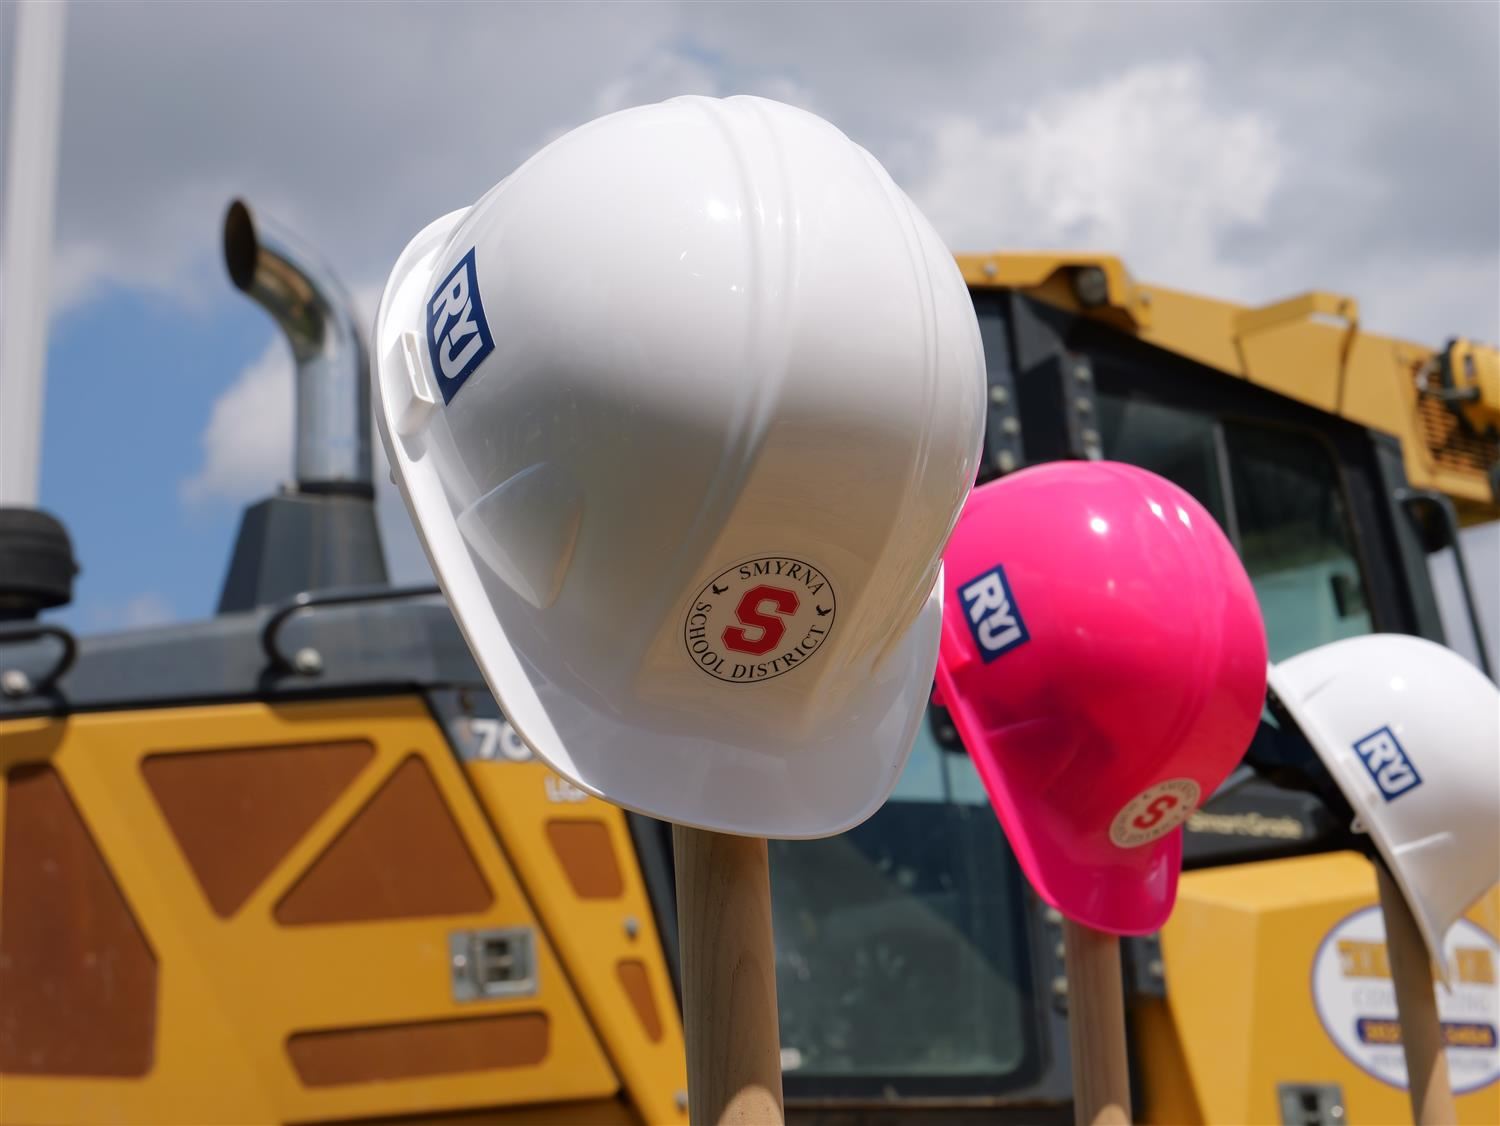 Construction helmet at CIS addition groundbreaking event